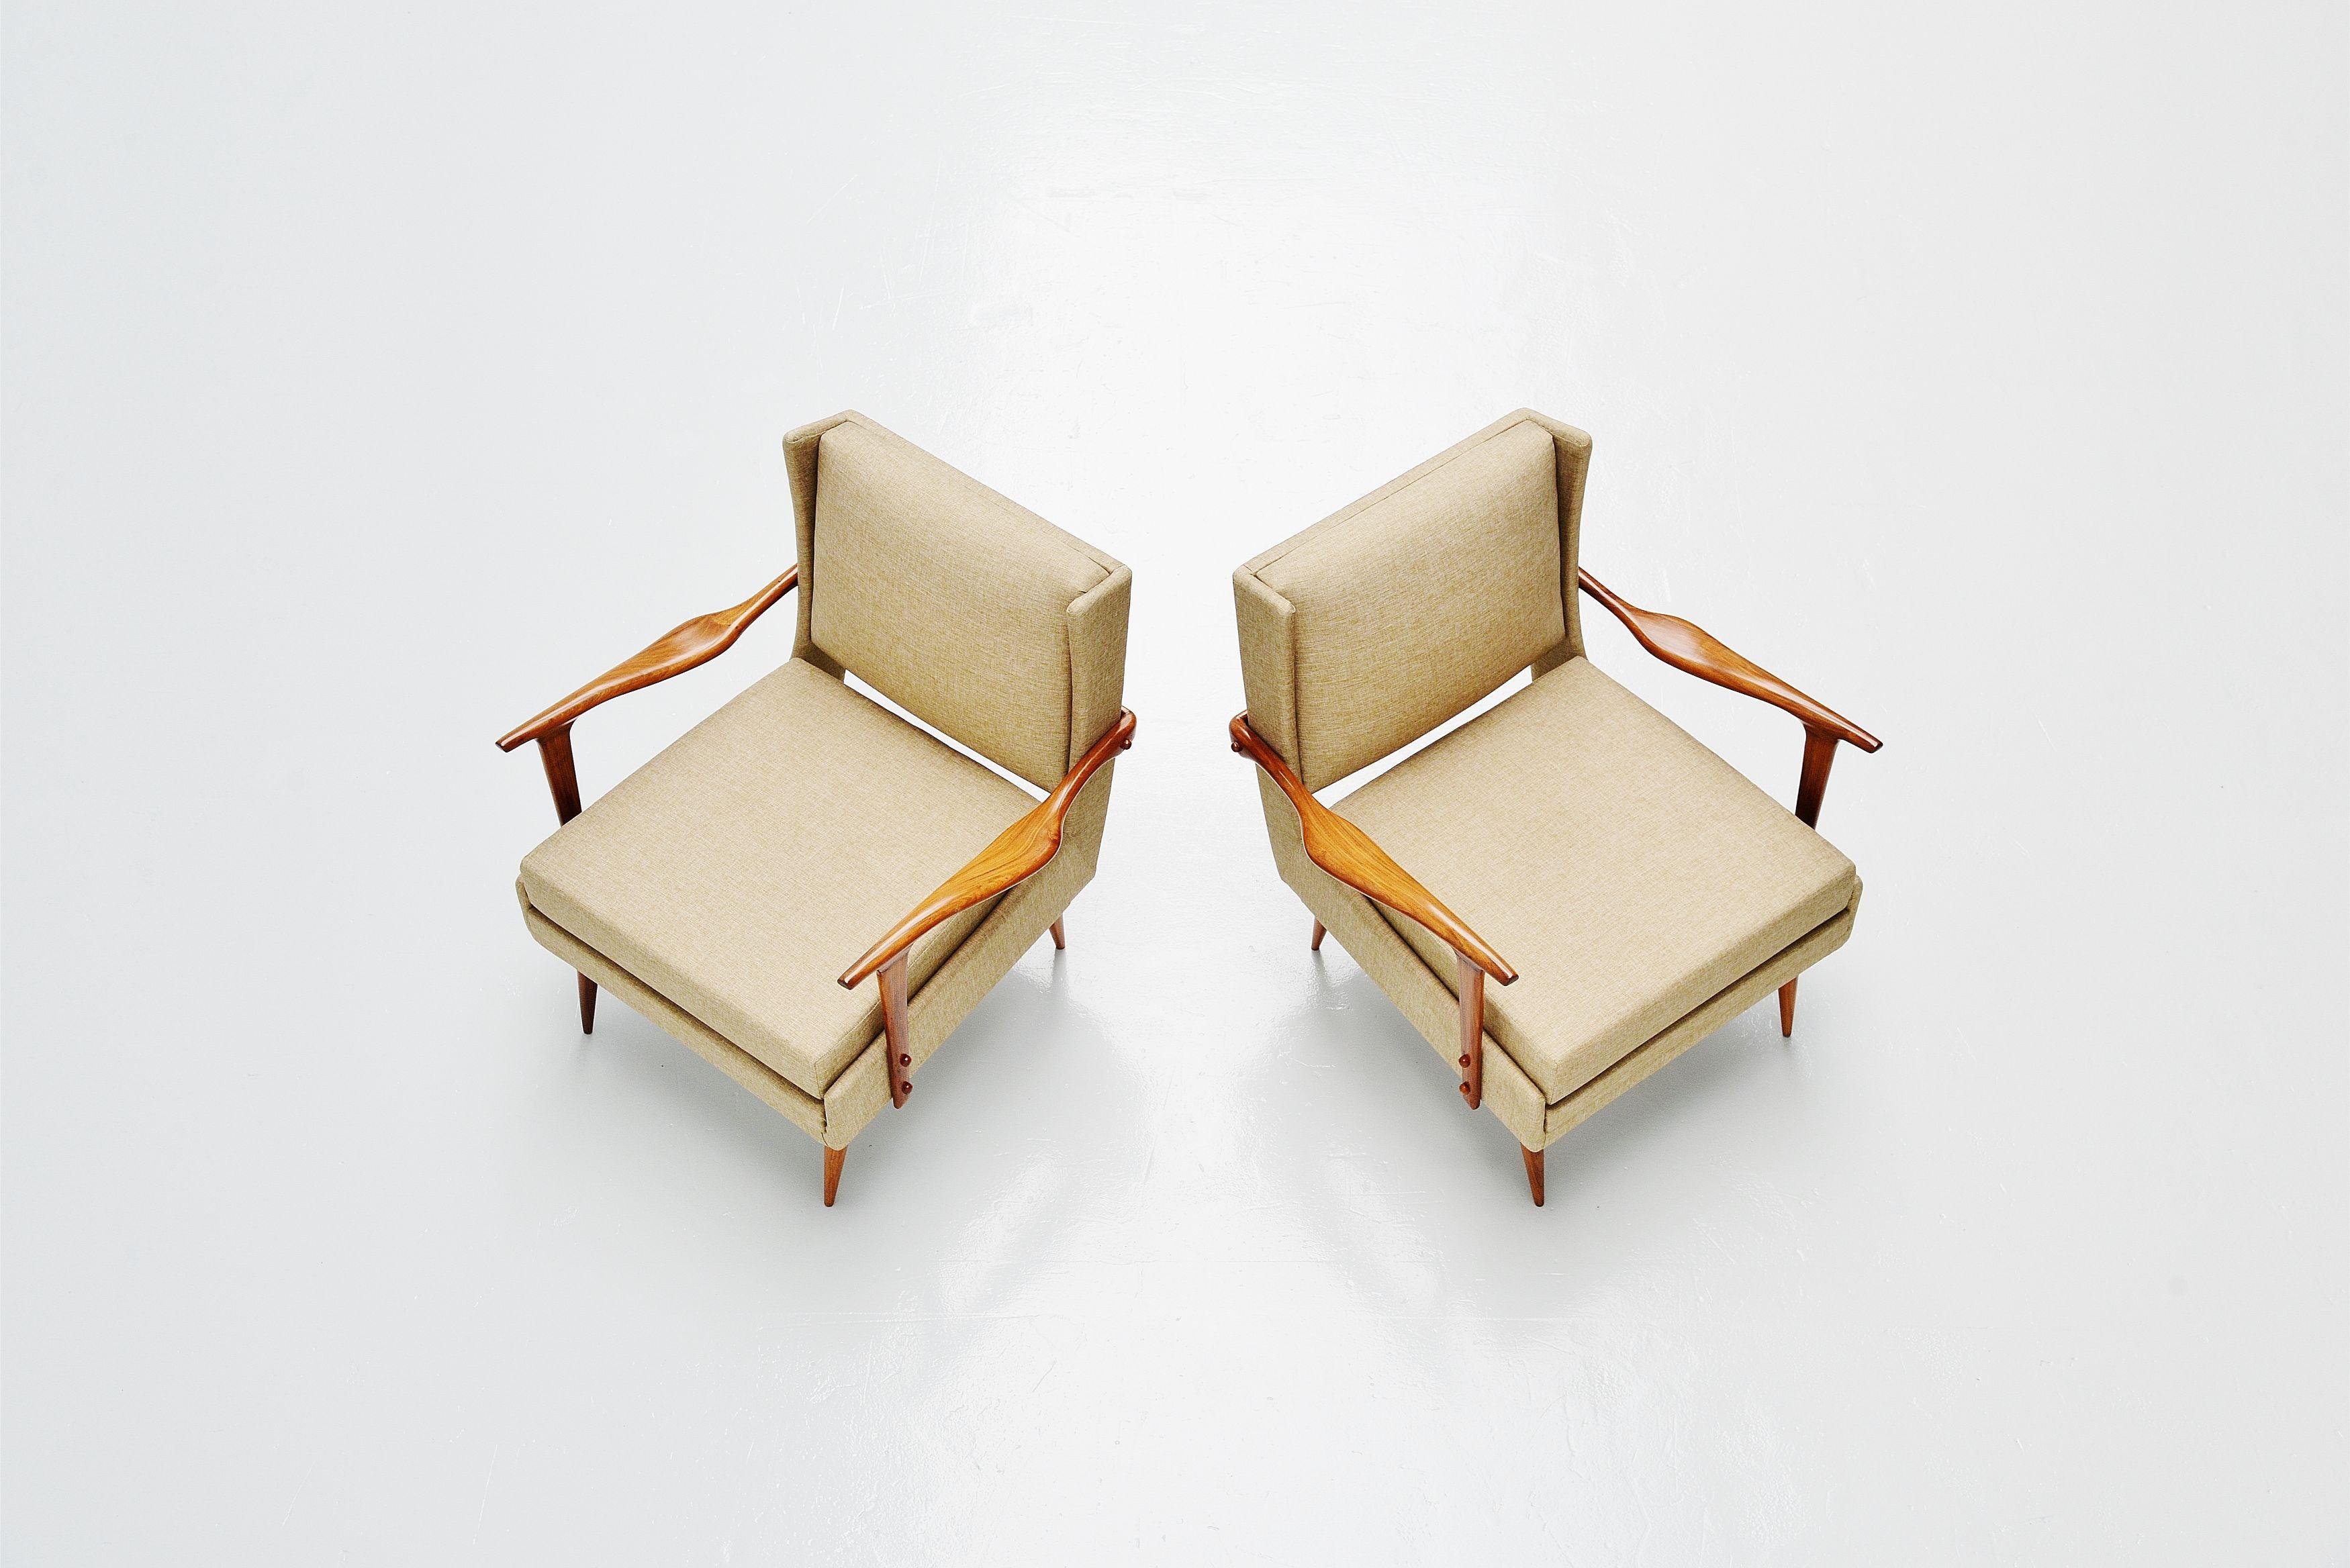 Brazilian Giuseppe Scapinelli Caviuna Lounge Chairs Pair, Brazil, 1955